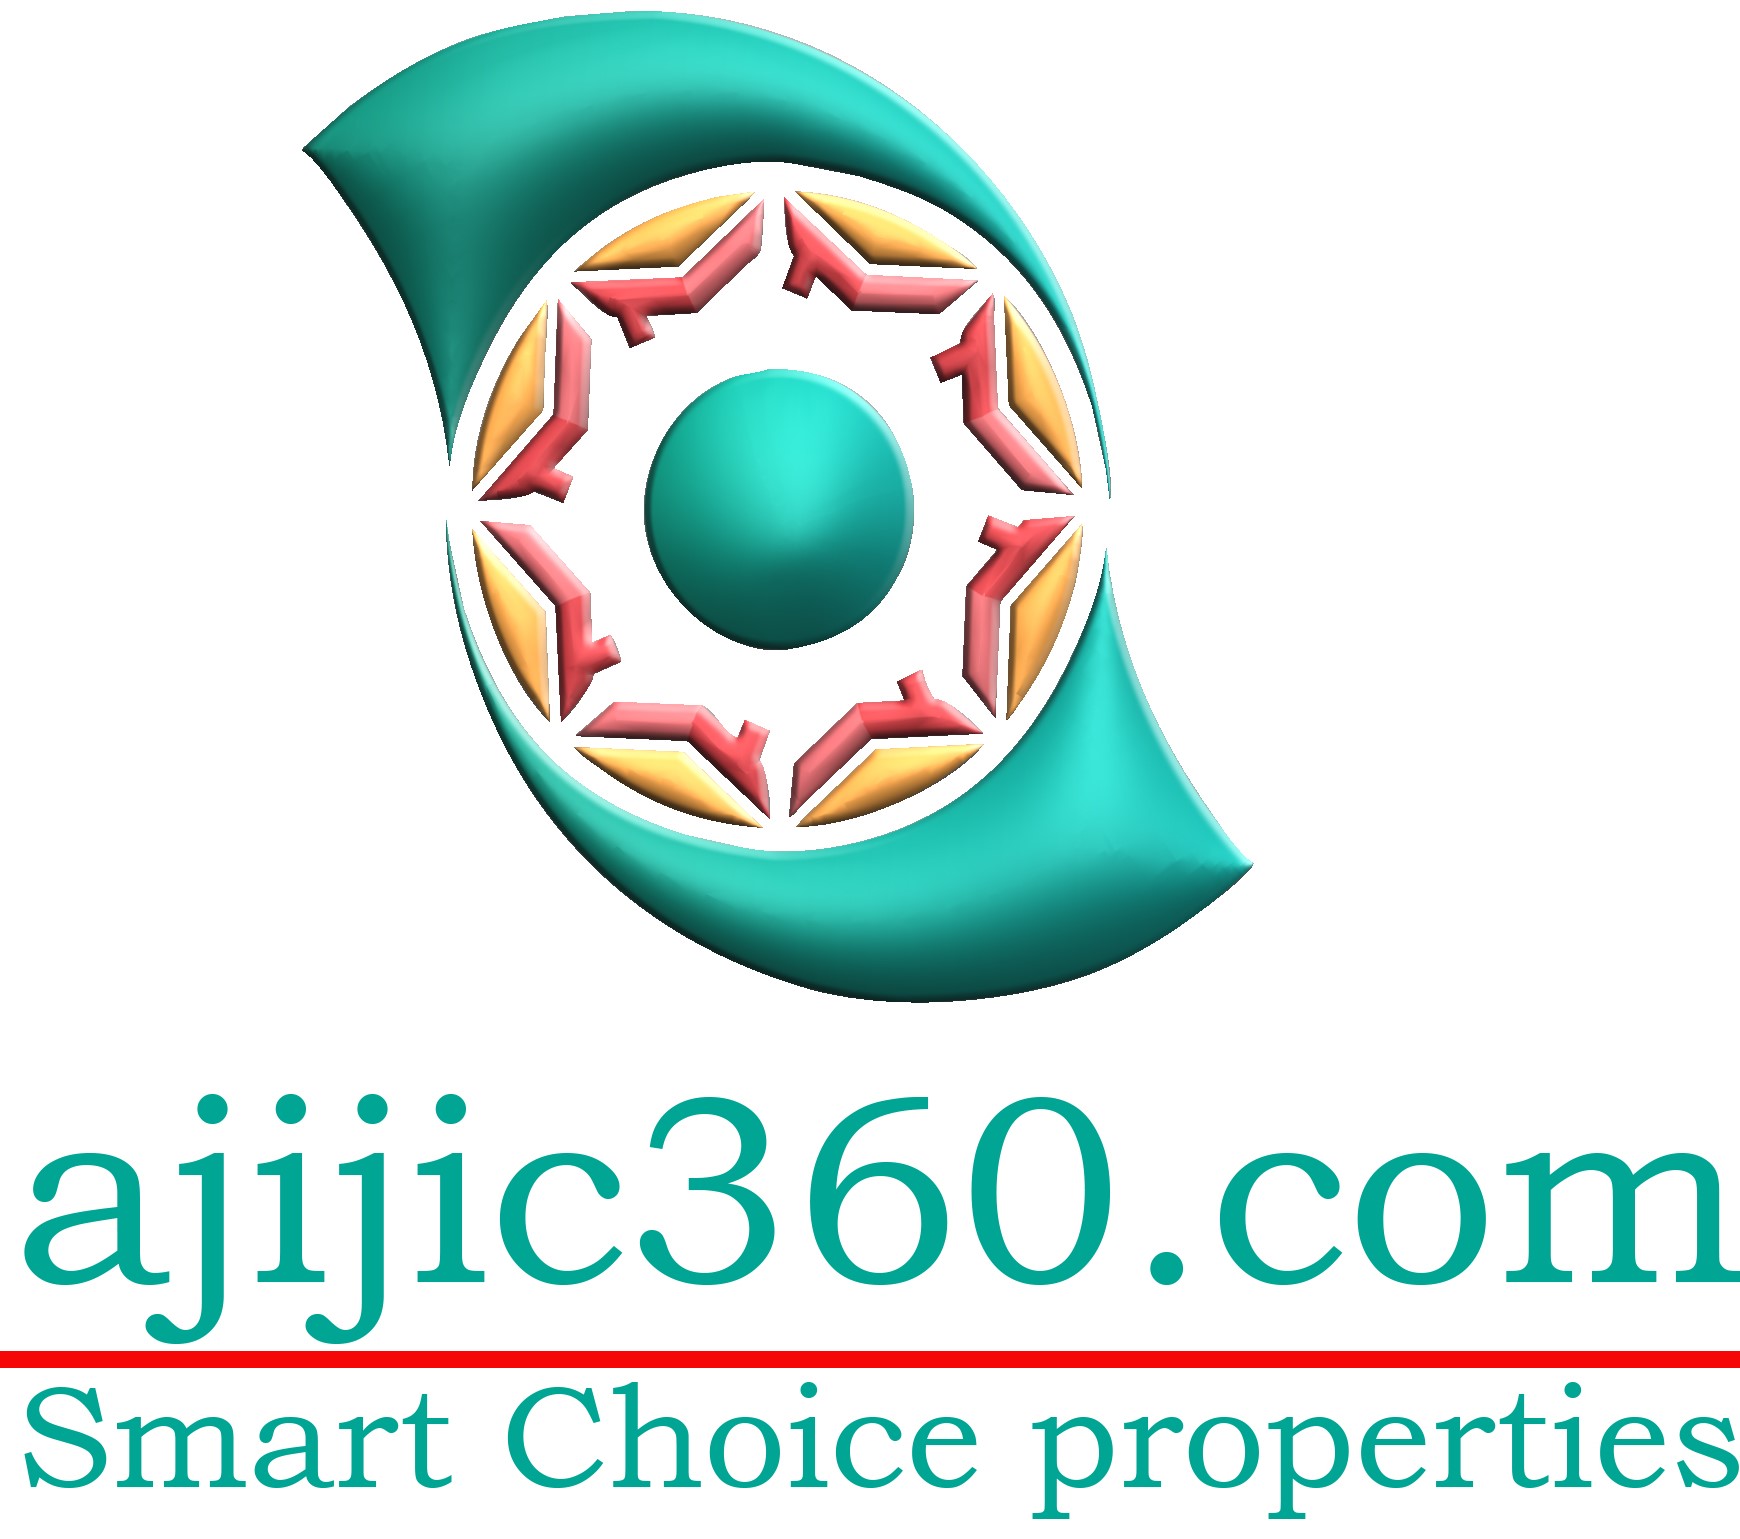  ajijic360 - smart choice properties